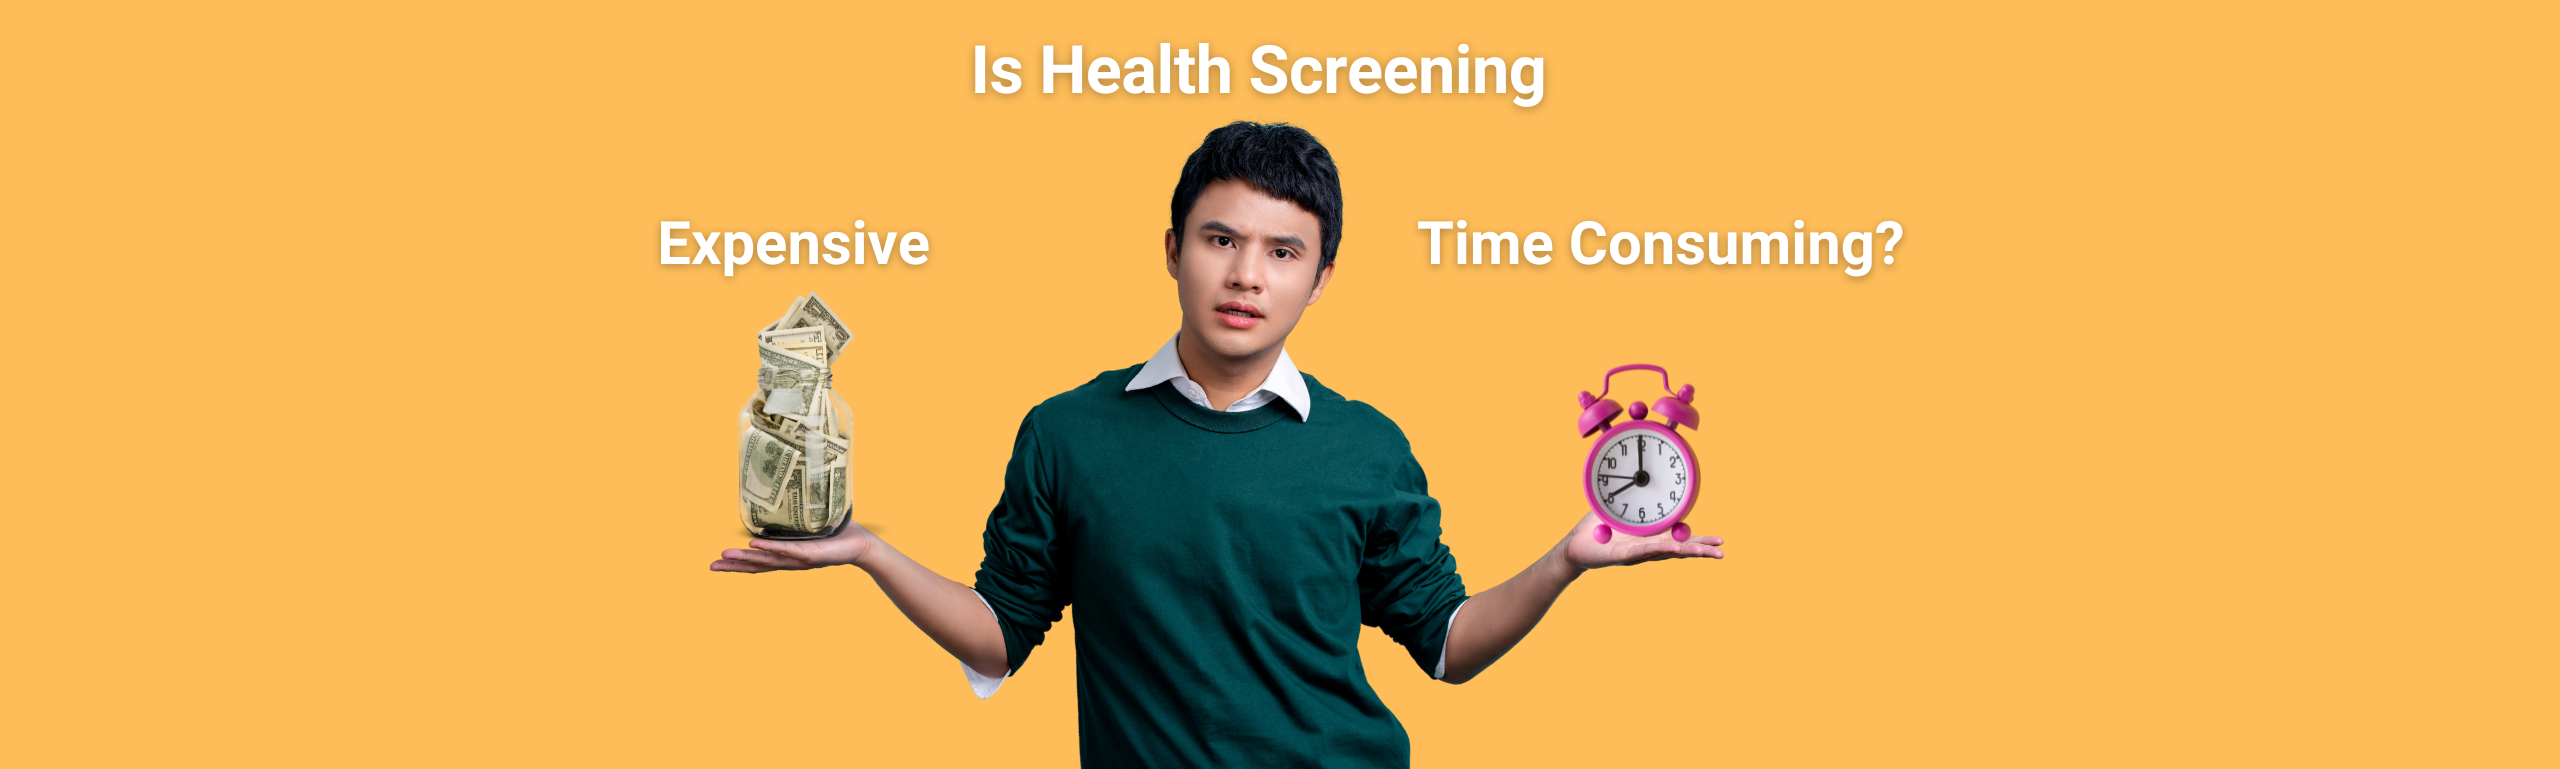 health screening at lifecare